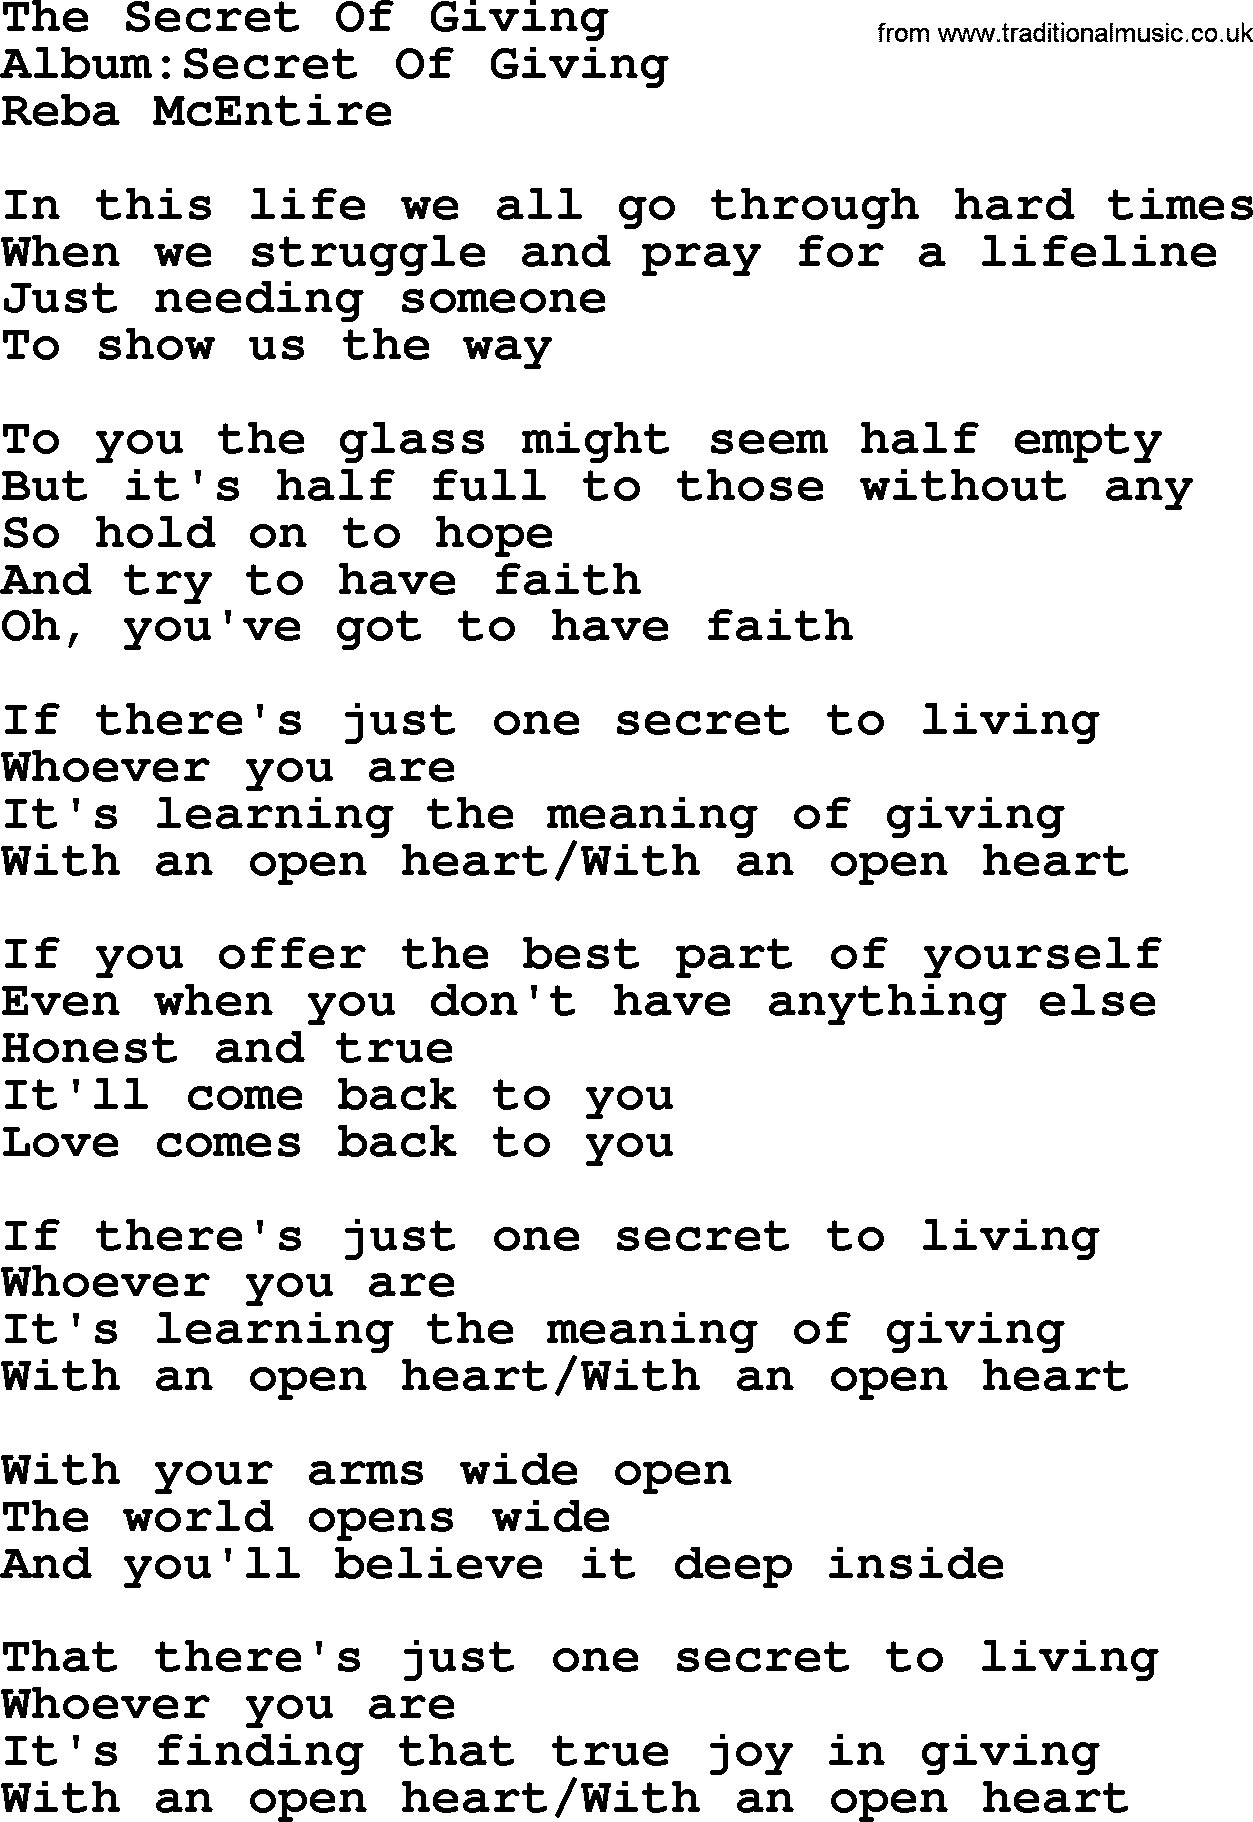 Reba McEntire song: The Secret Of Giving lyrics